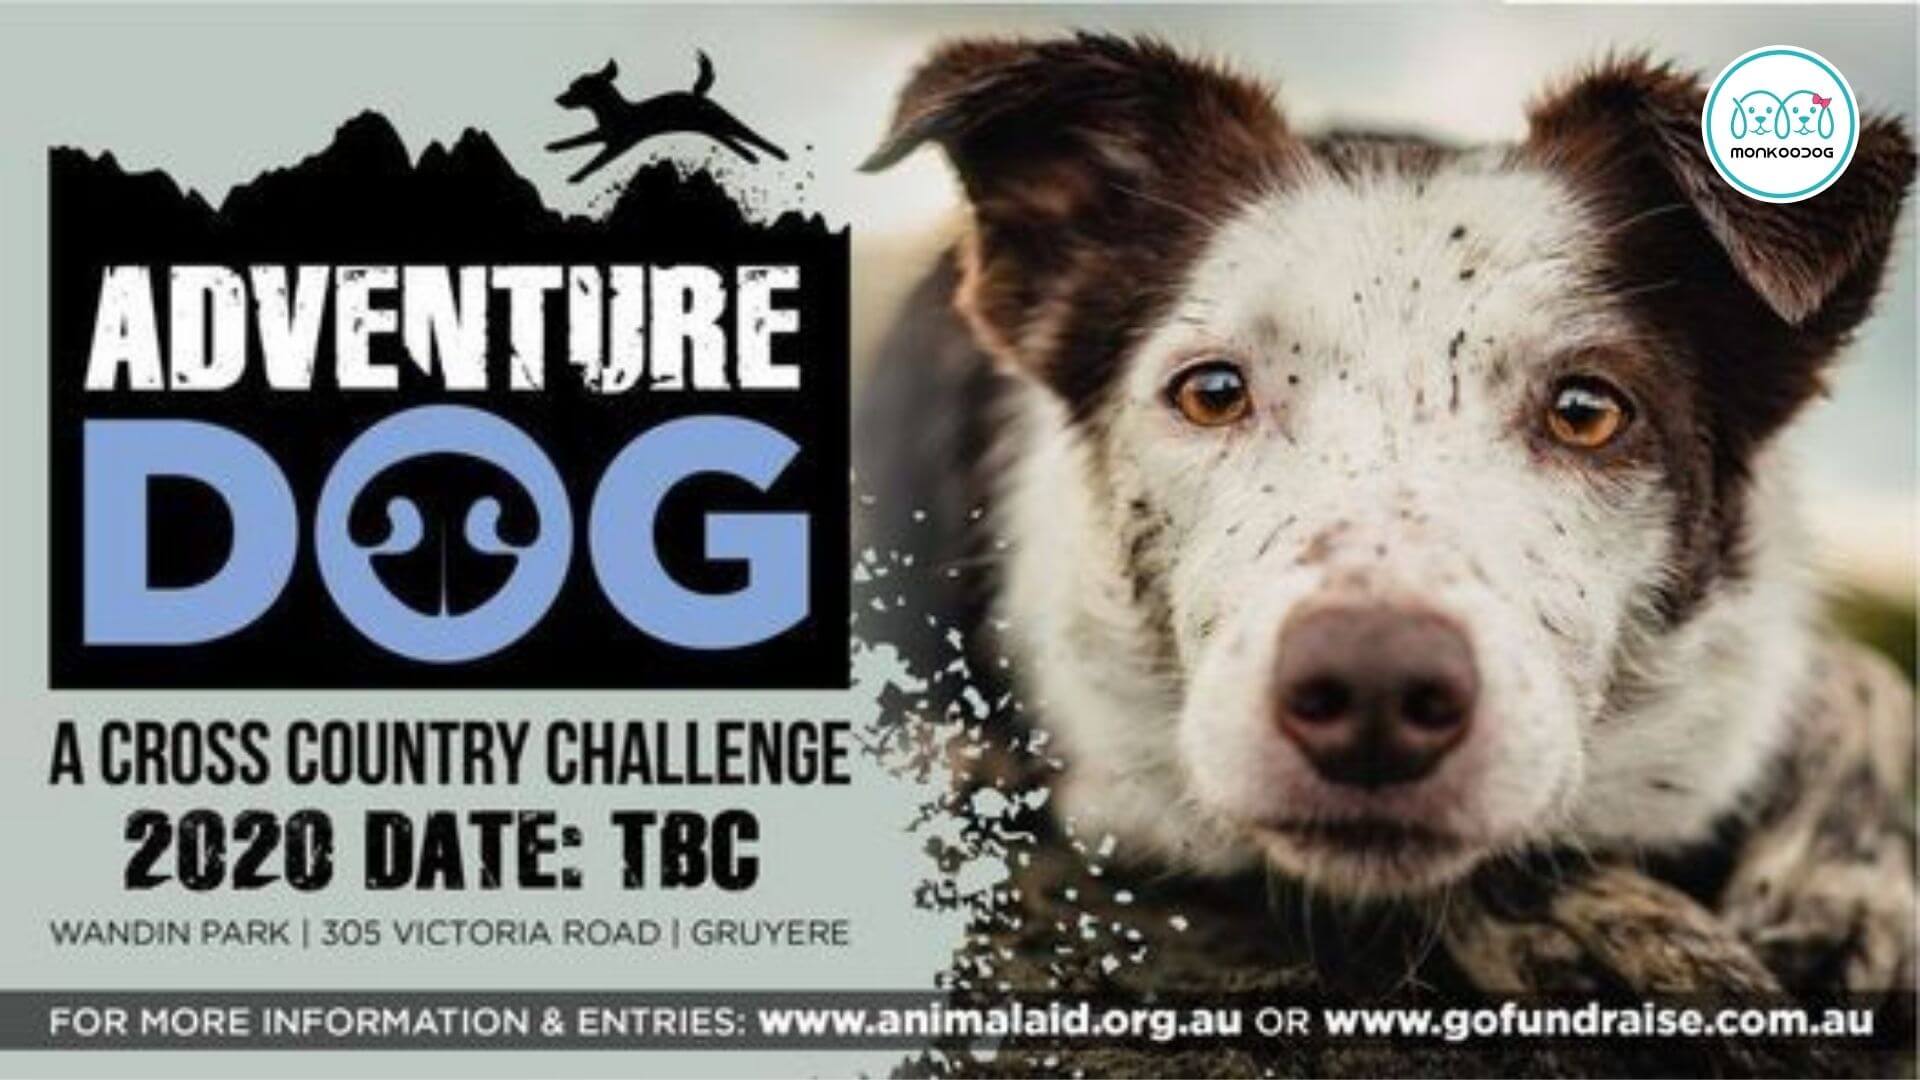 Adventure Dog 2021- The Cross Country Challenge - Monkoodog